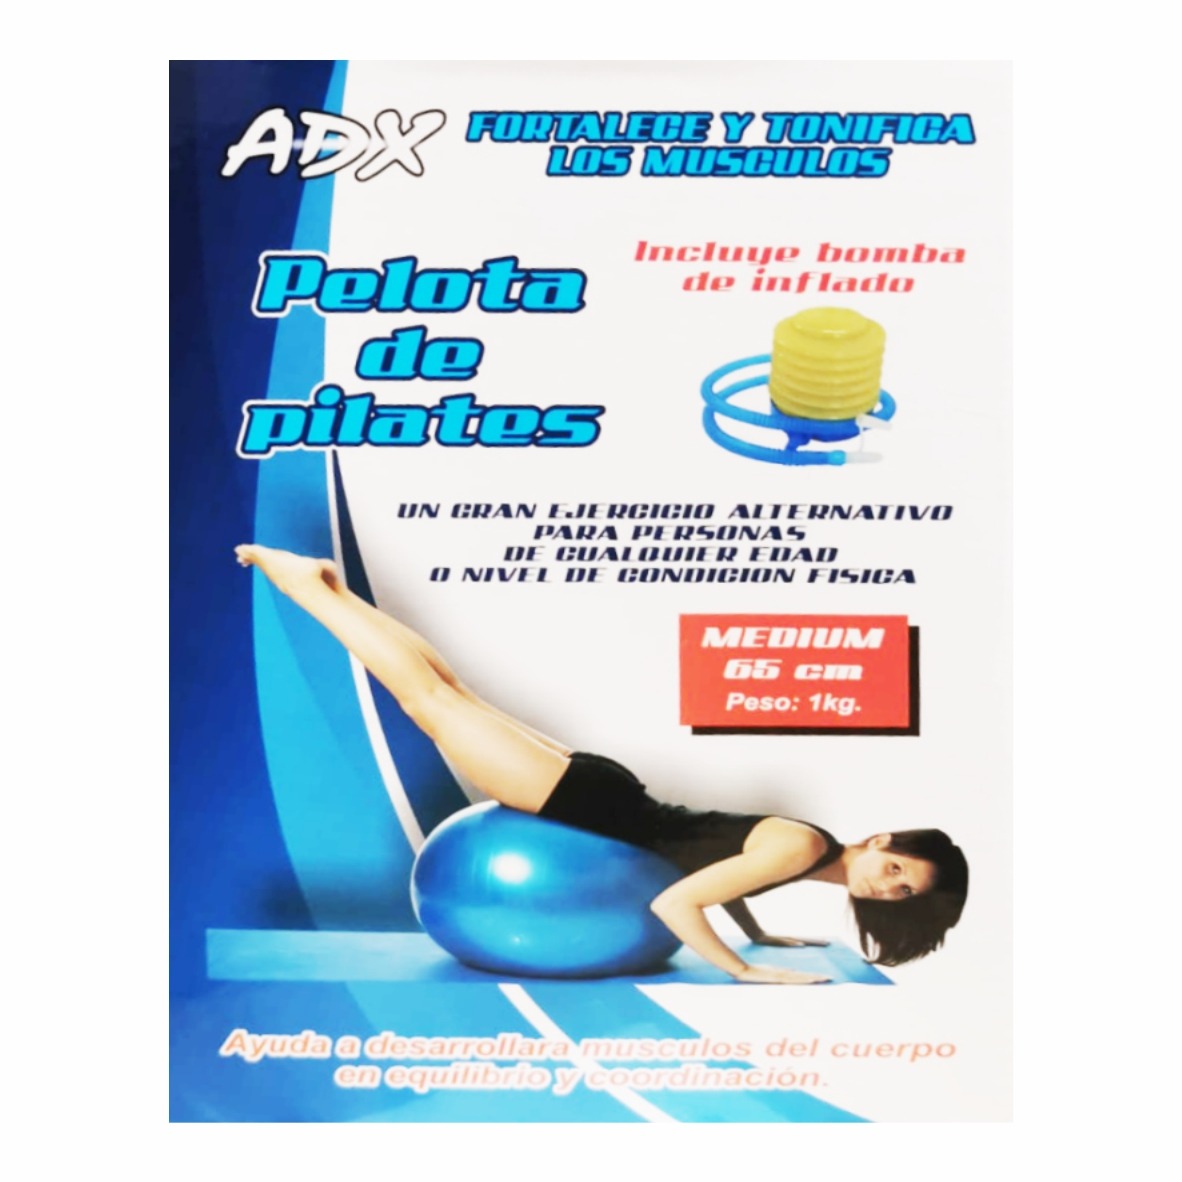 Pelota Yoga-pilates-fitness 65 Cm De Diametro Incluye Bomba